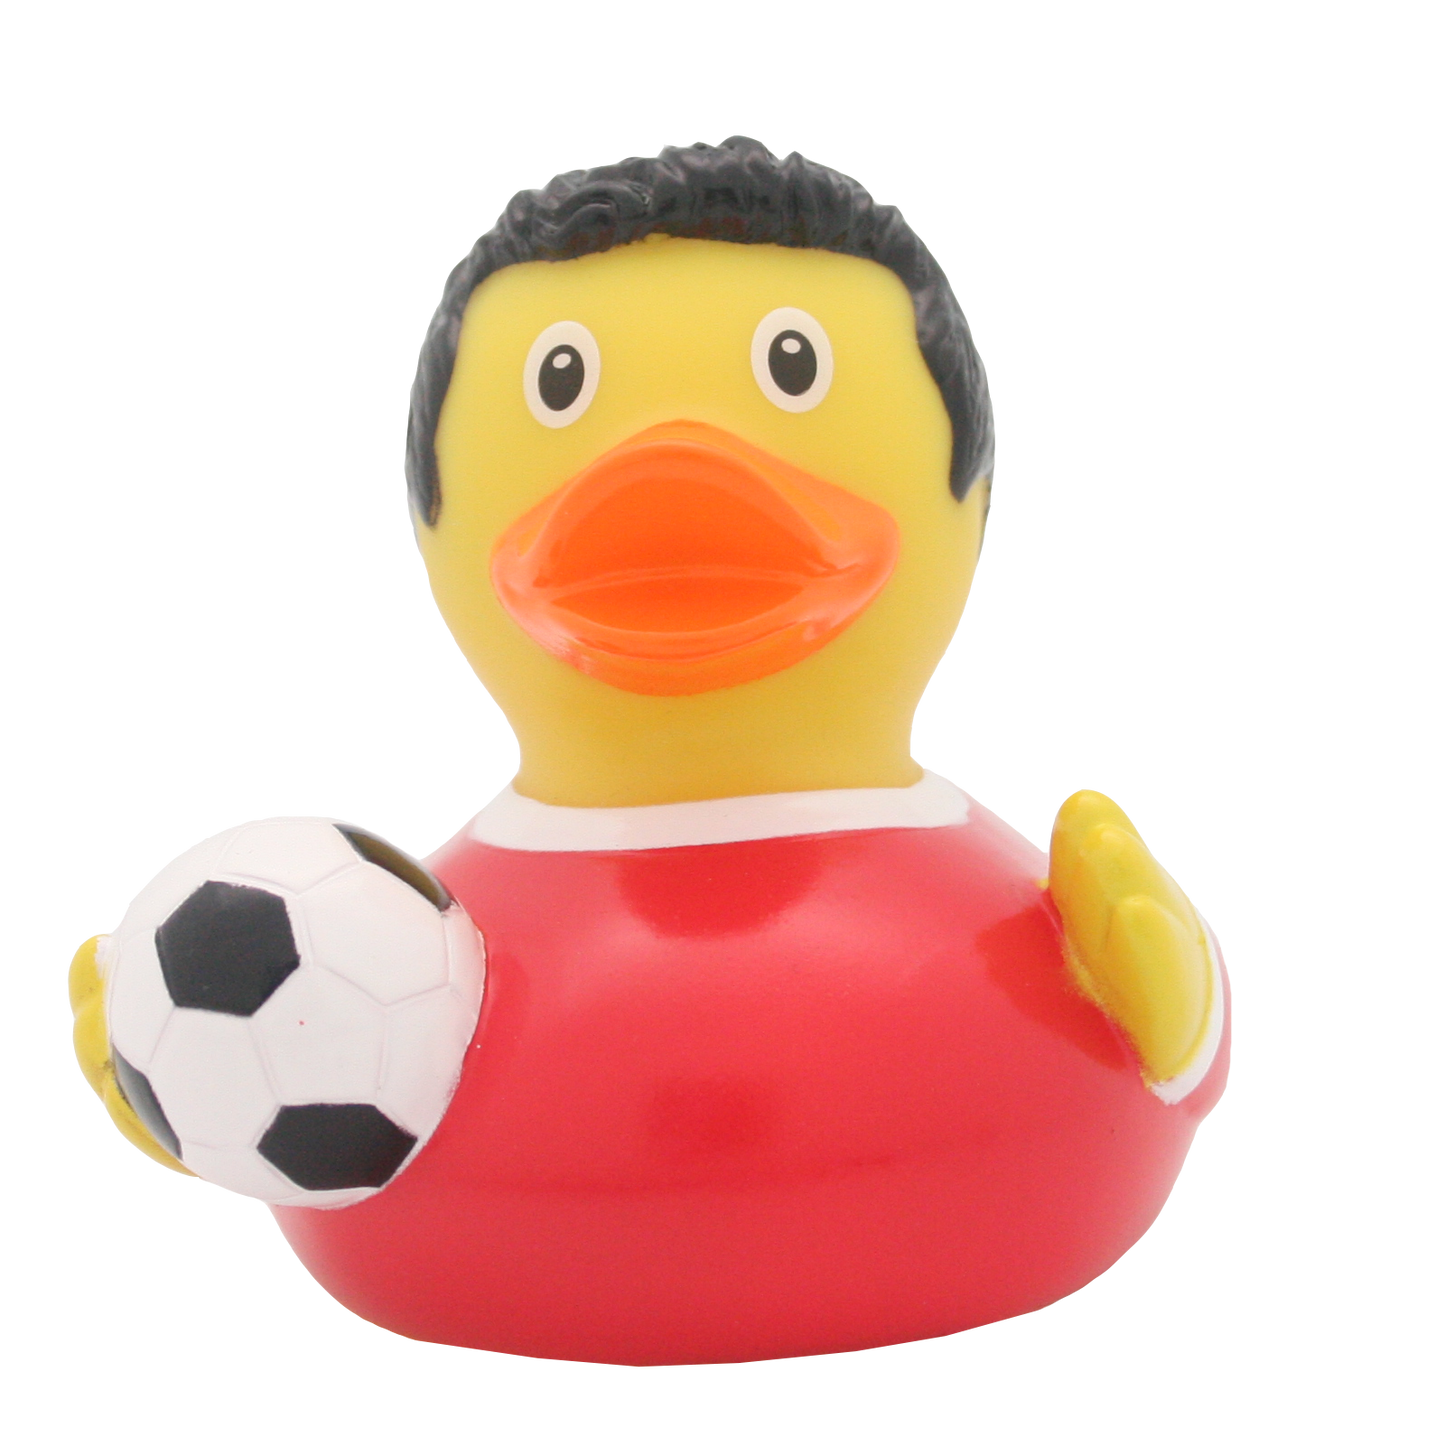 Red footballer duck